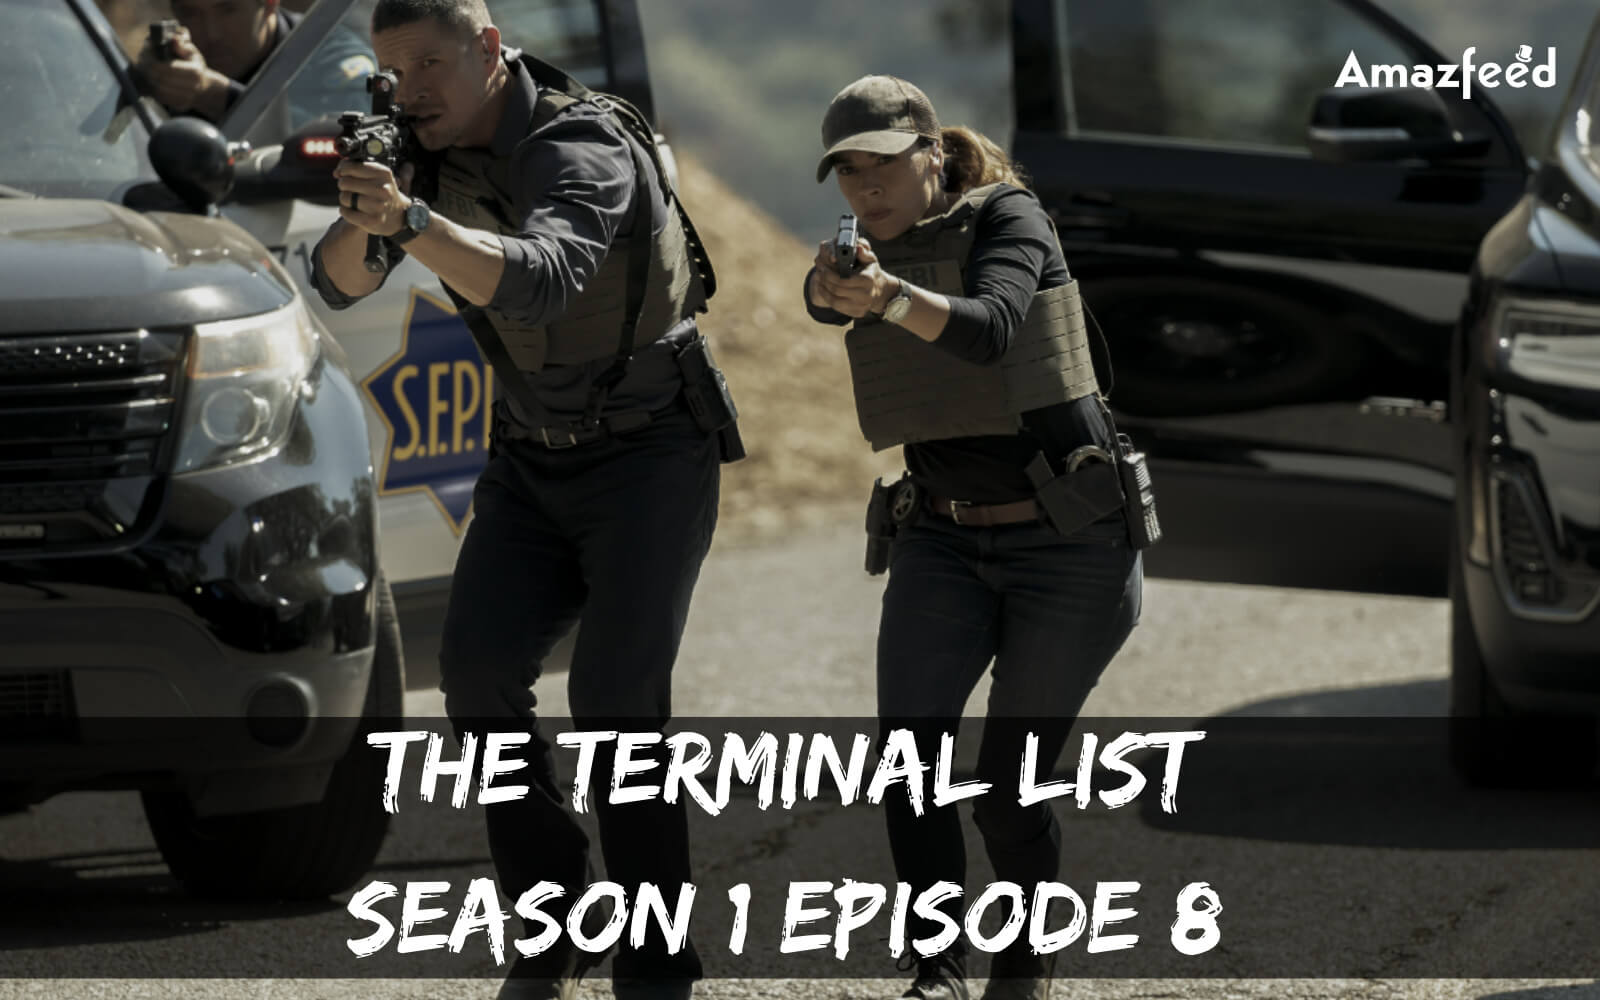 The Terminal List season 1 episode 8 release date